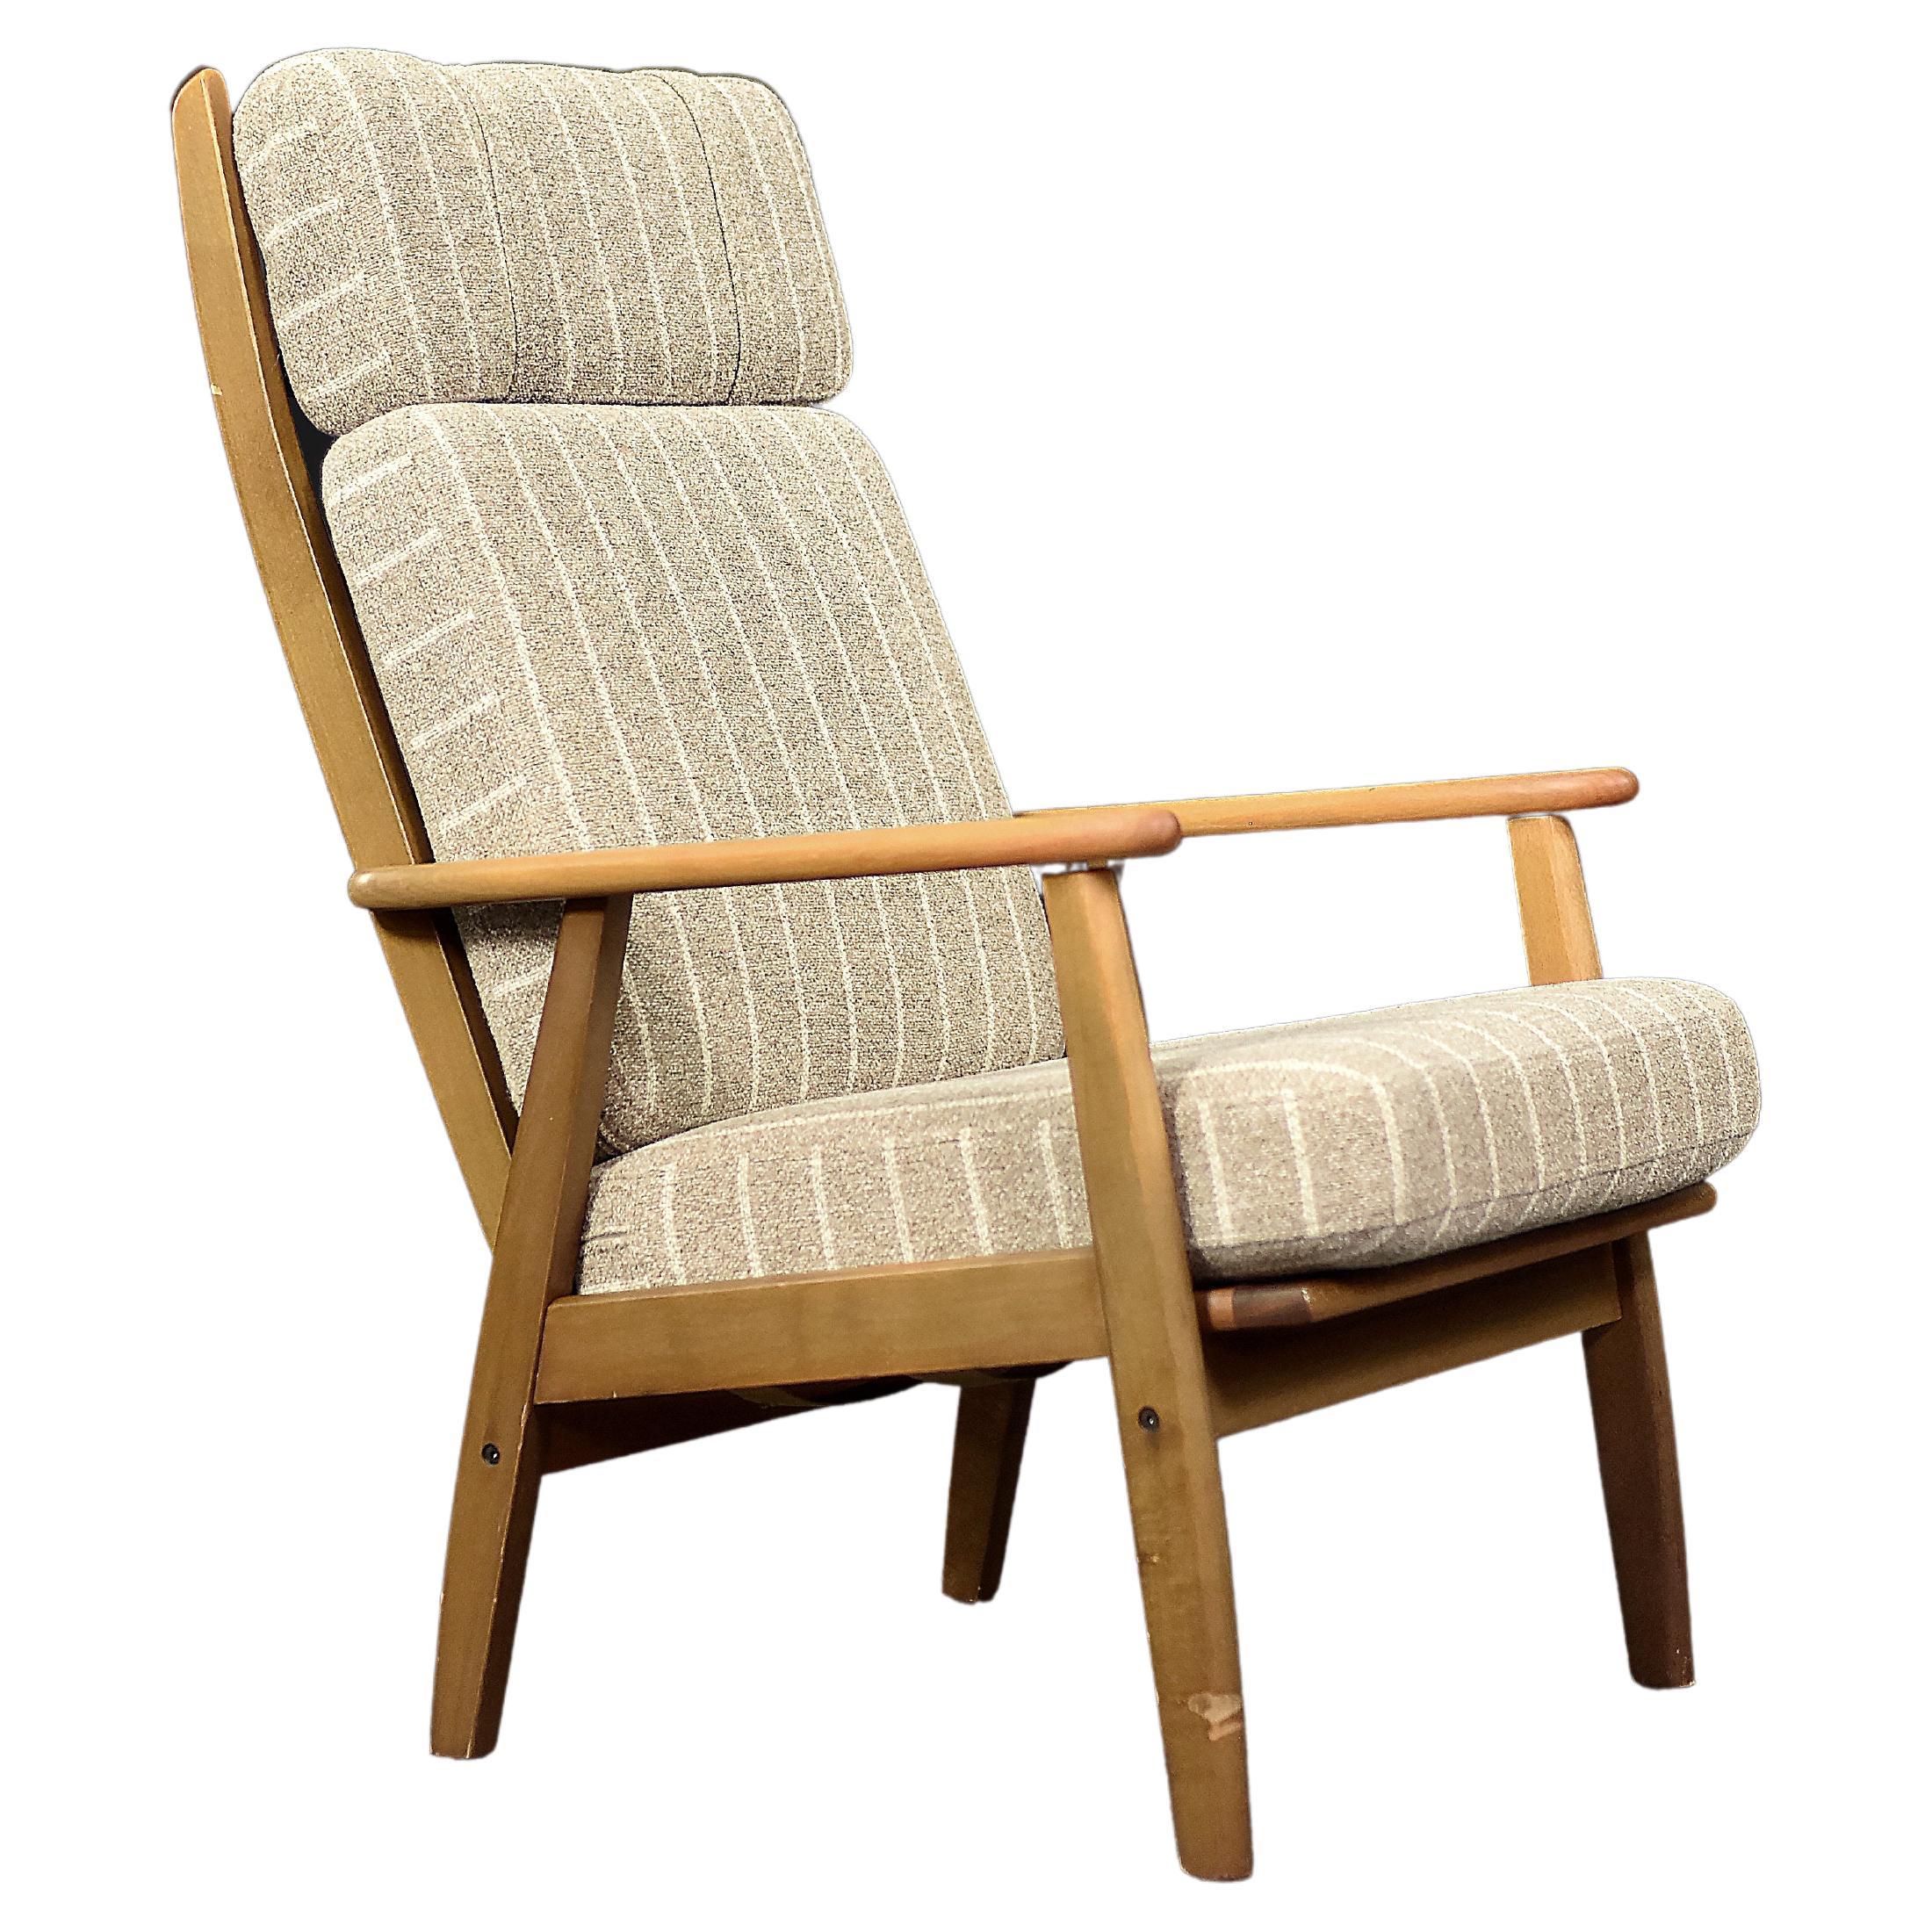 Vintage Midcentury Danish Modern Wood & Beige Fabric Lounge Chair from Durup